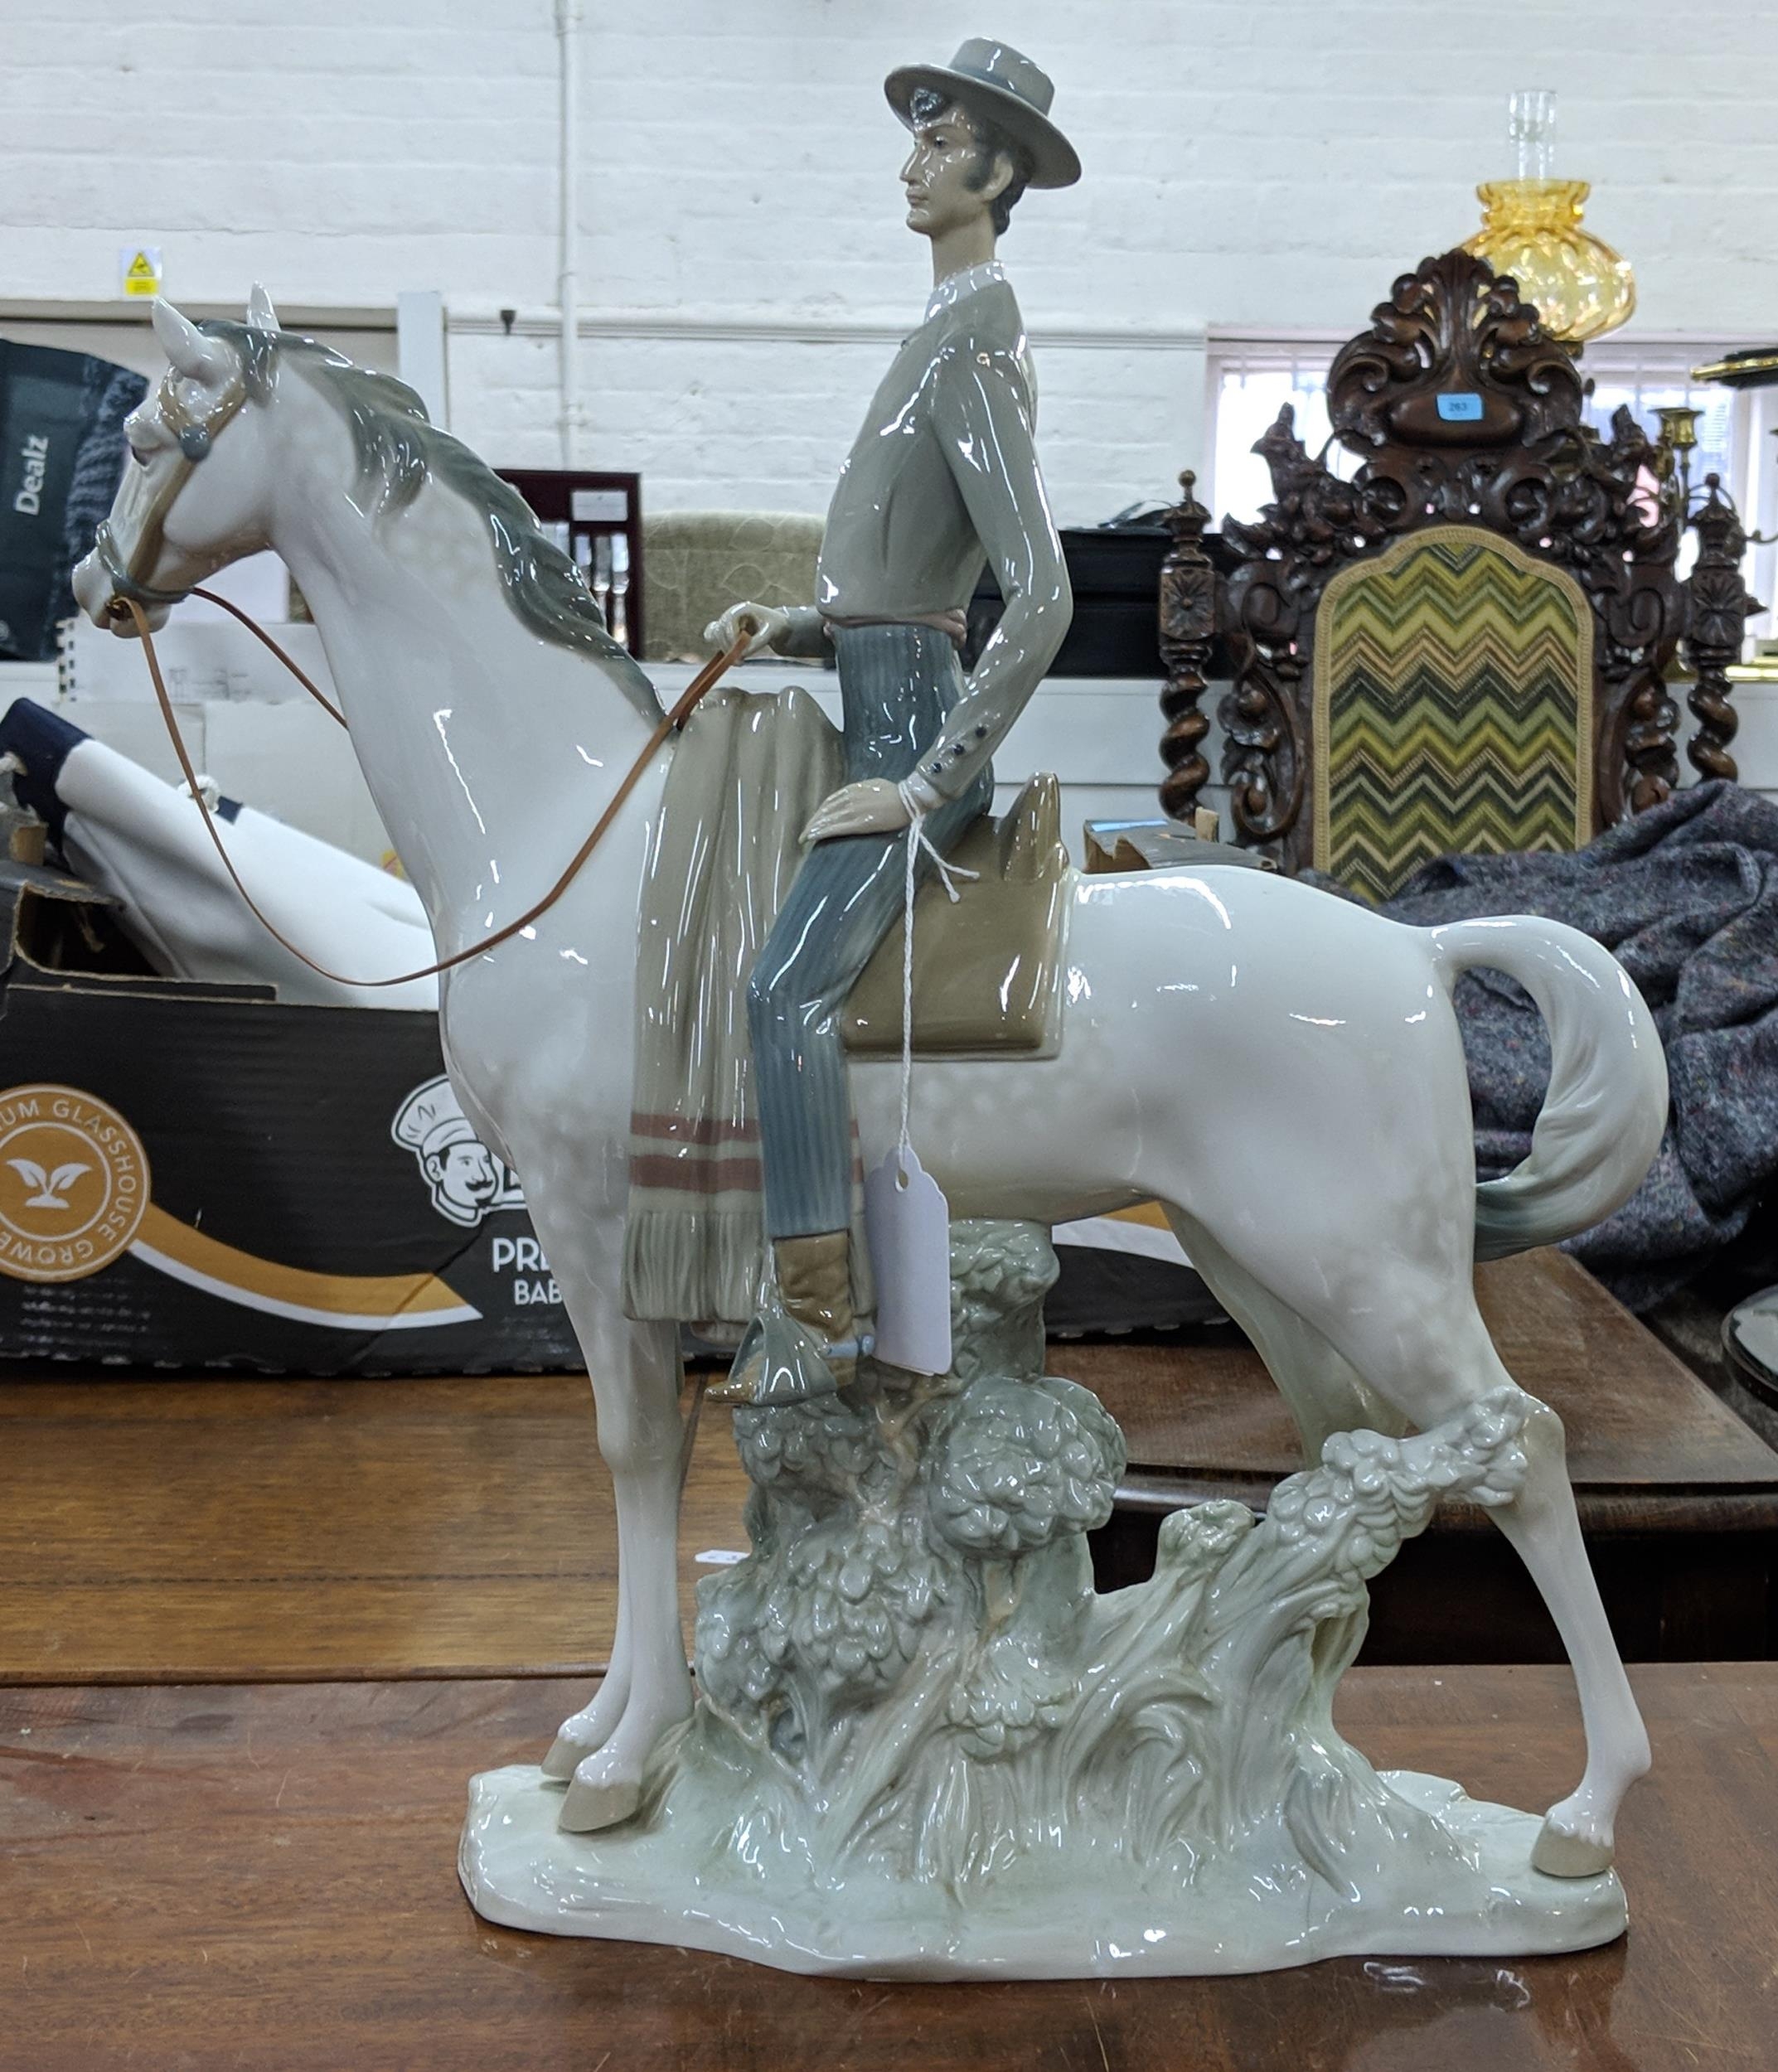 A Lladro figure of an elegant man in smart dress on horseback, Location: